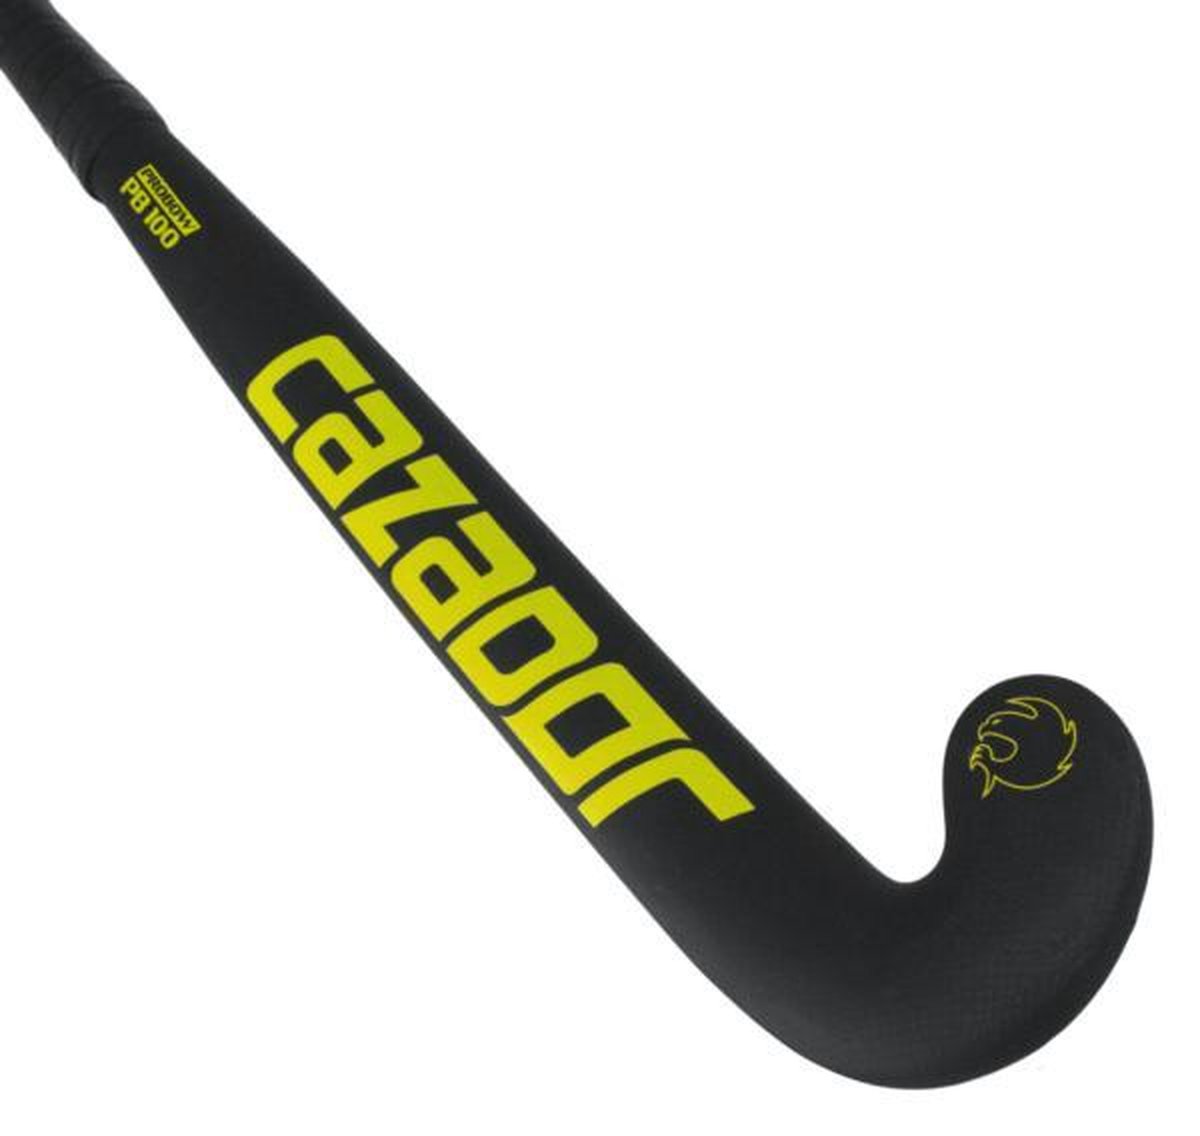 Cazador hockeystick probow 100% carbon